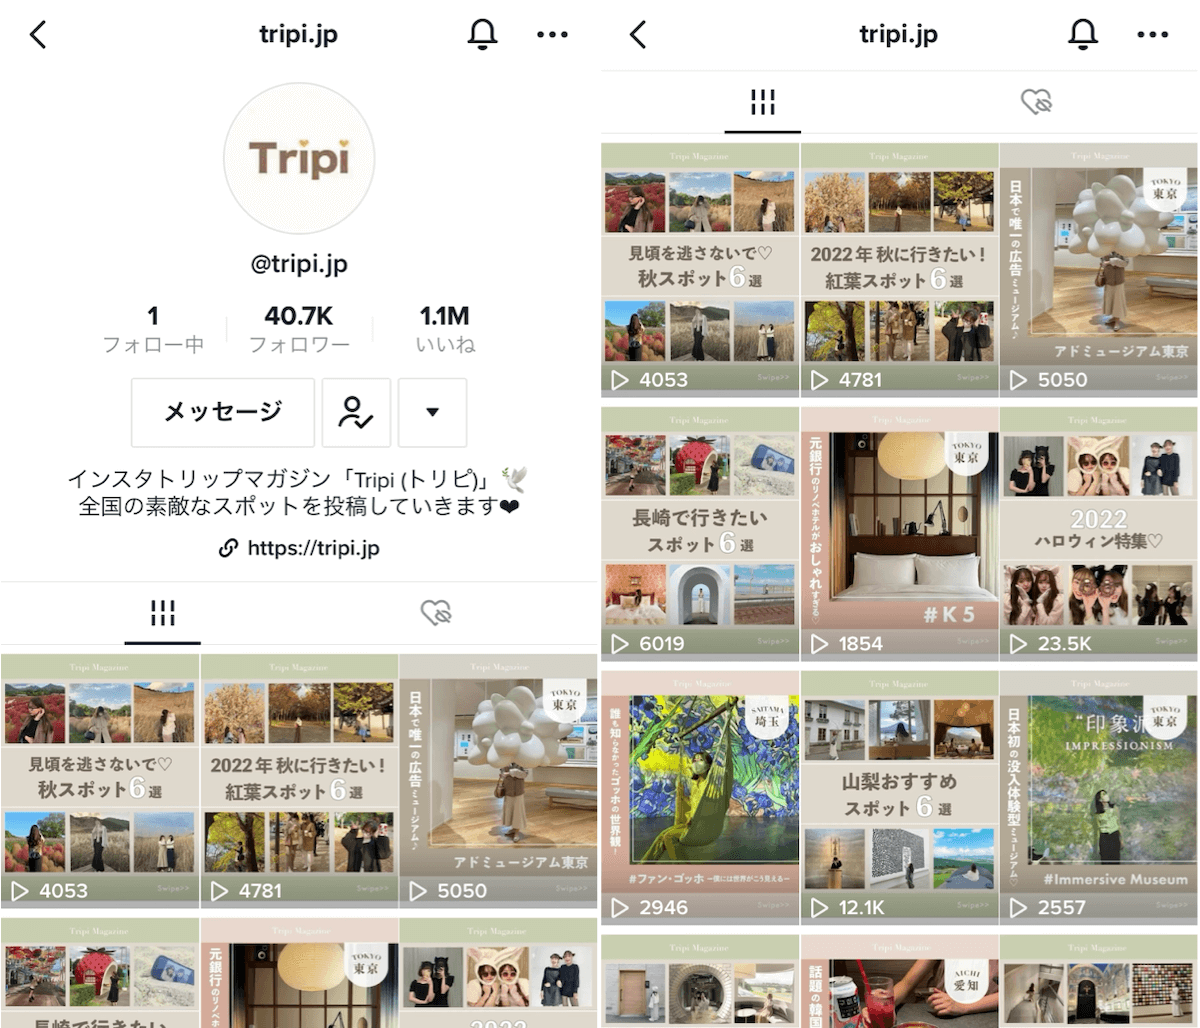 tiktok-official-accounts-travel-tripi-jp